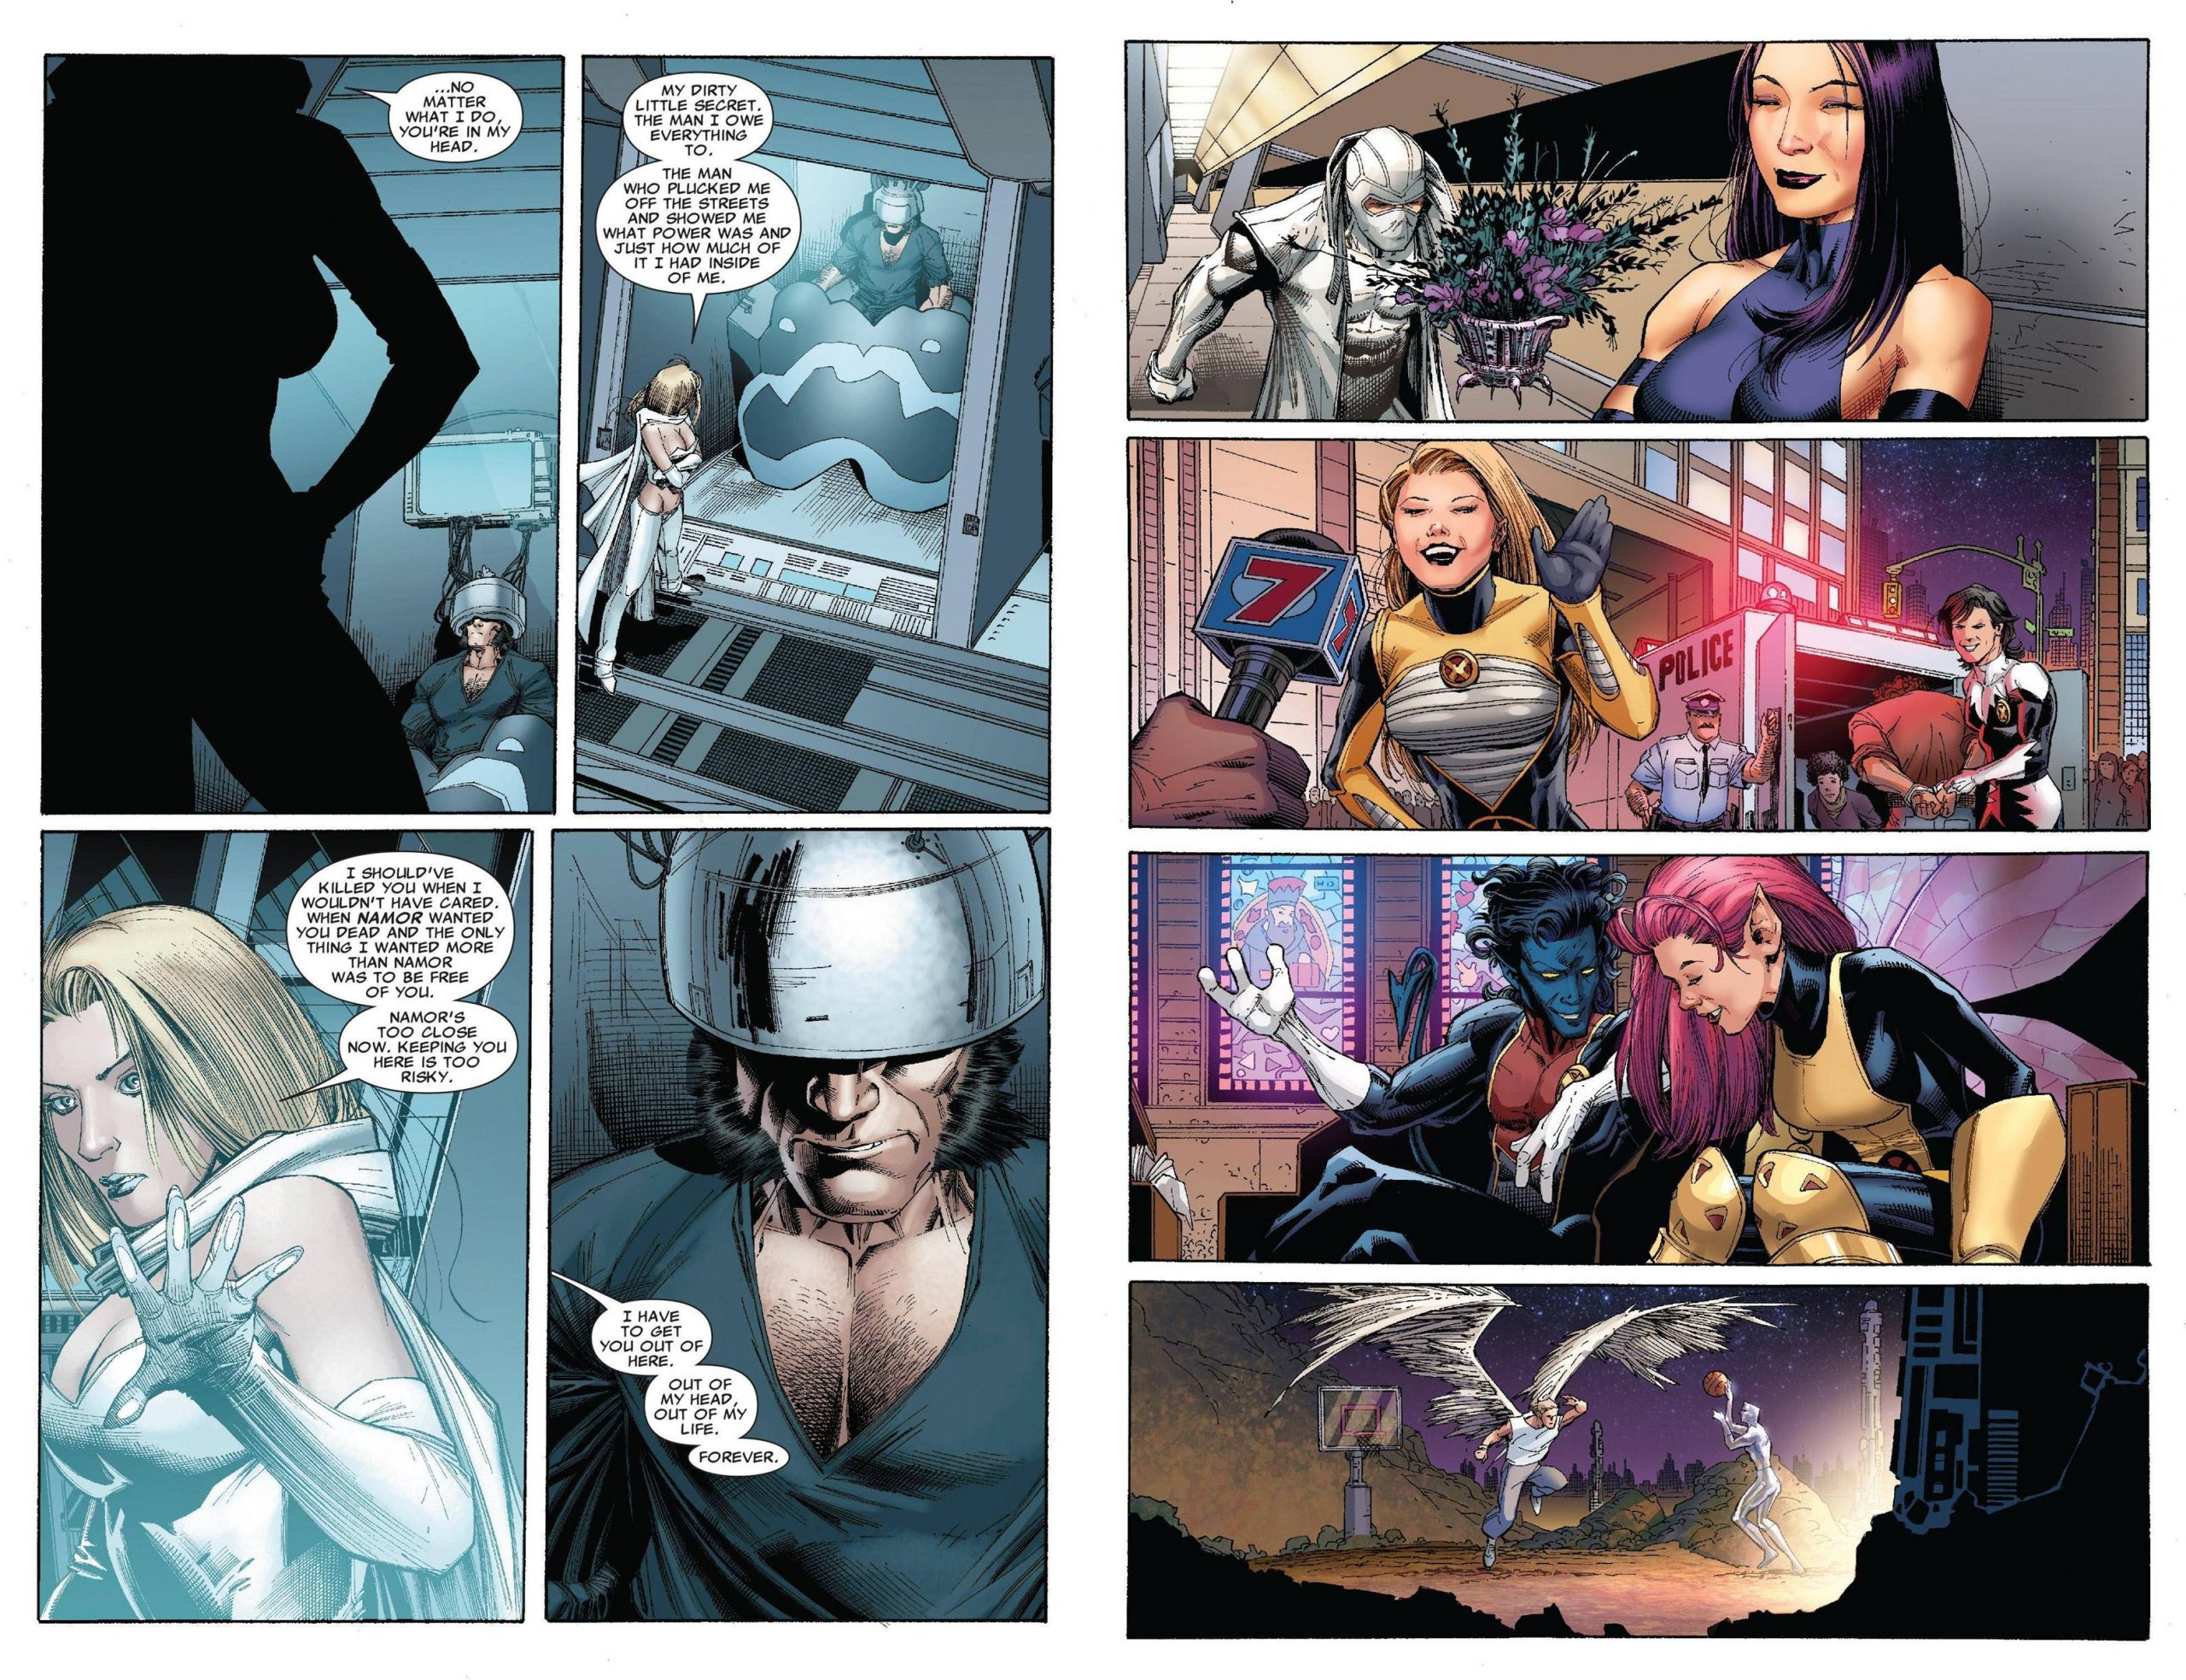 Uncanny X-Men: The Complete Collection by Matt Fraction Vol. 3 review